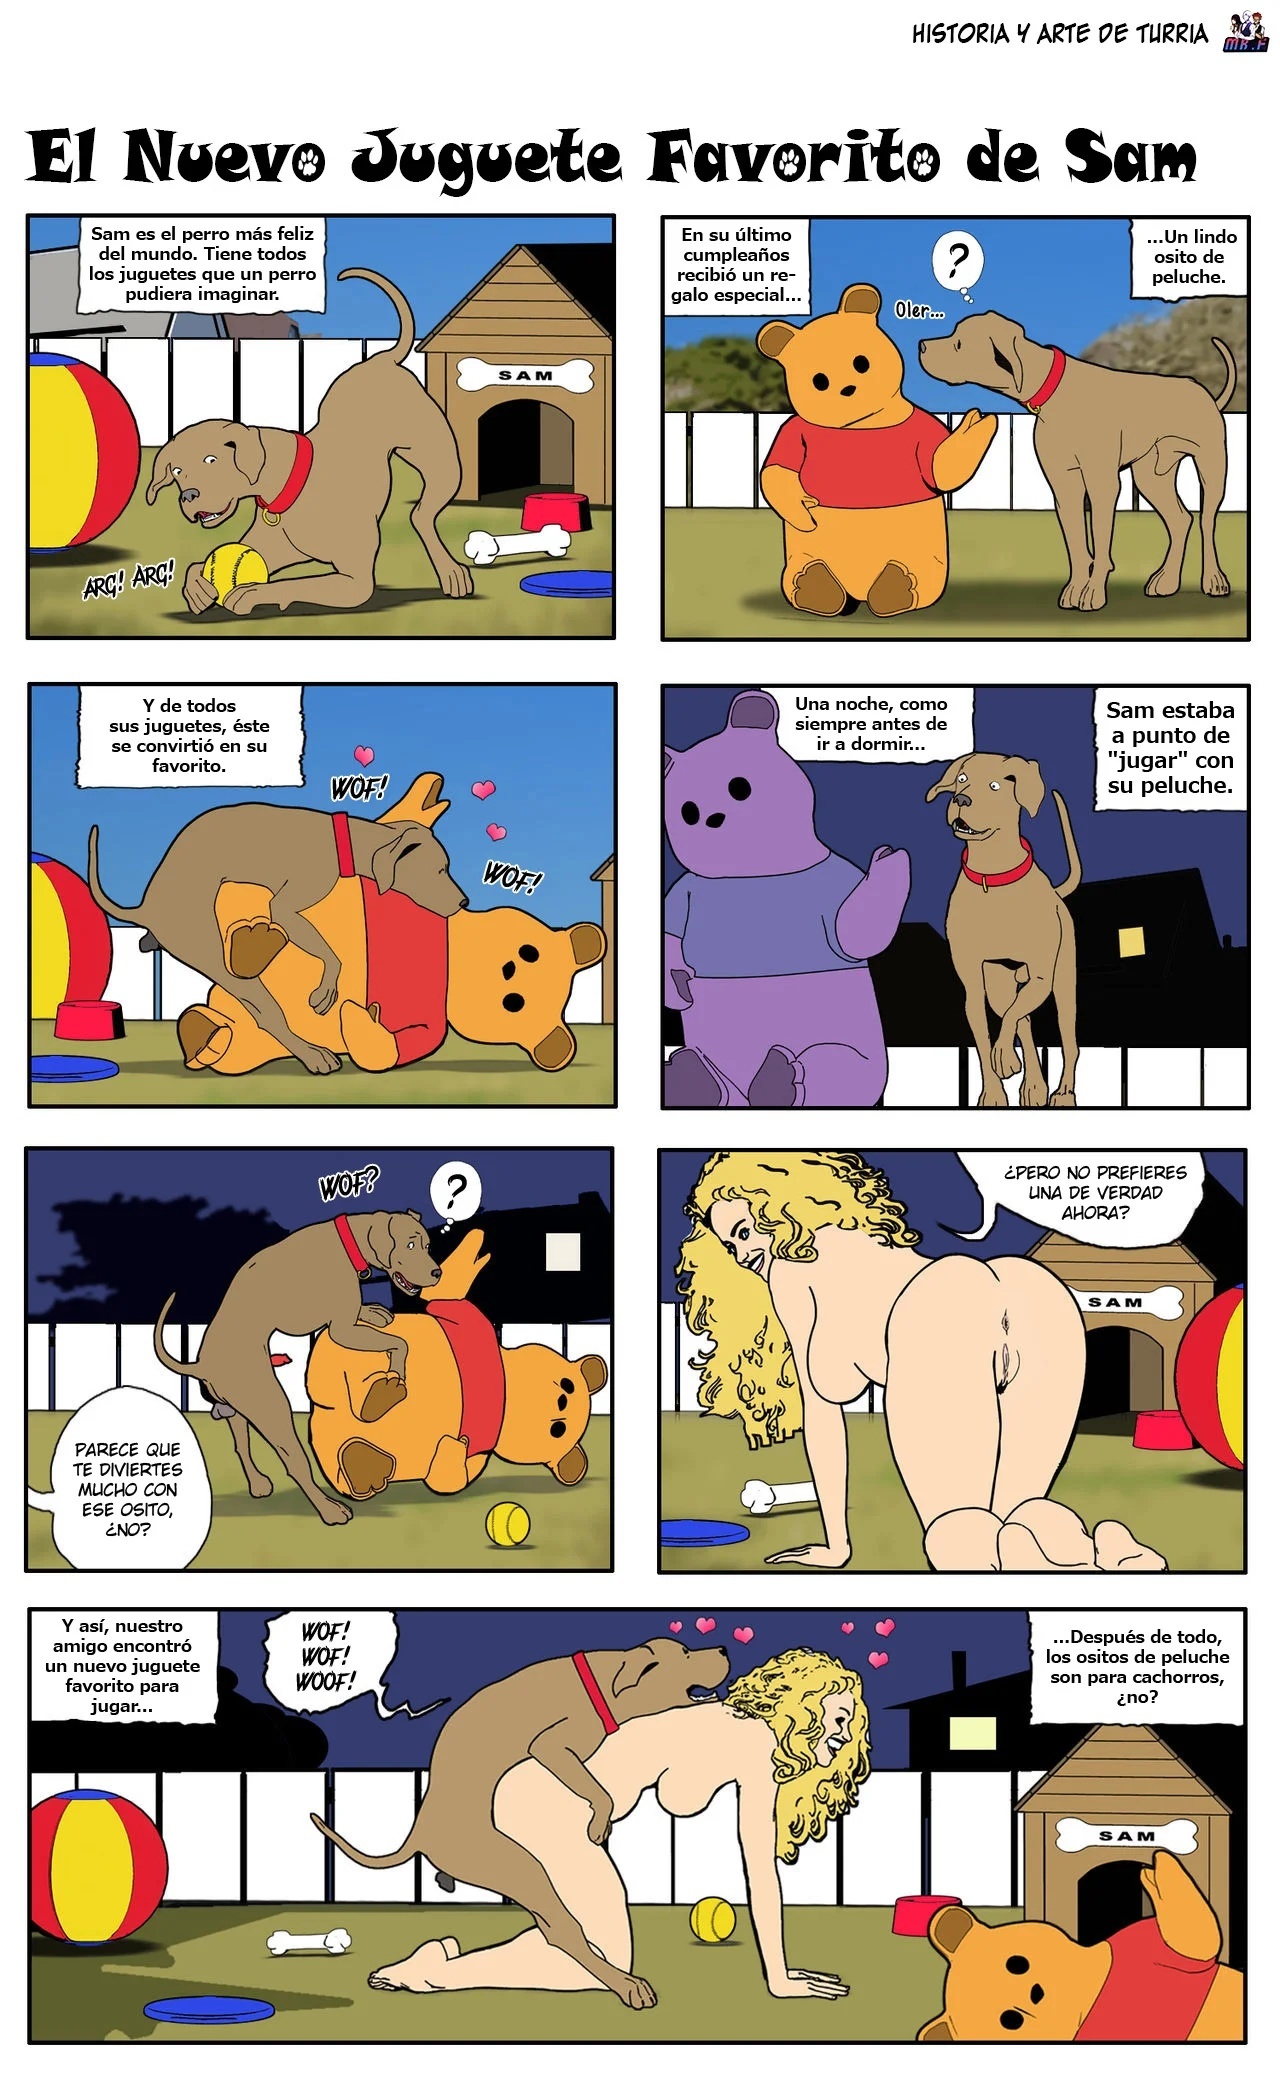 New Comic Strips (dog) _ Nuevas Tiras Comicas (Perro) - 2